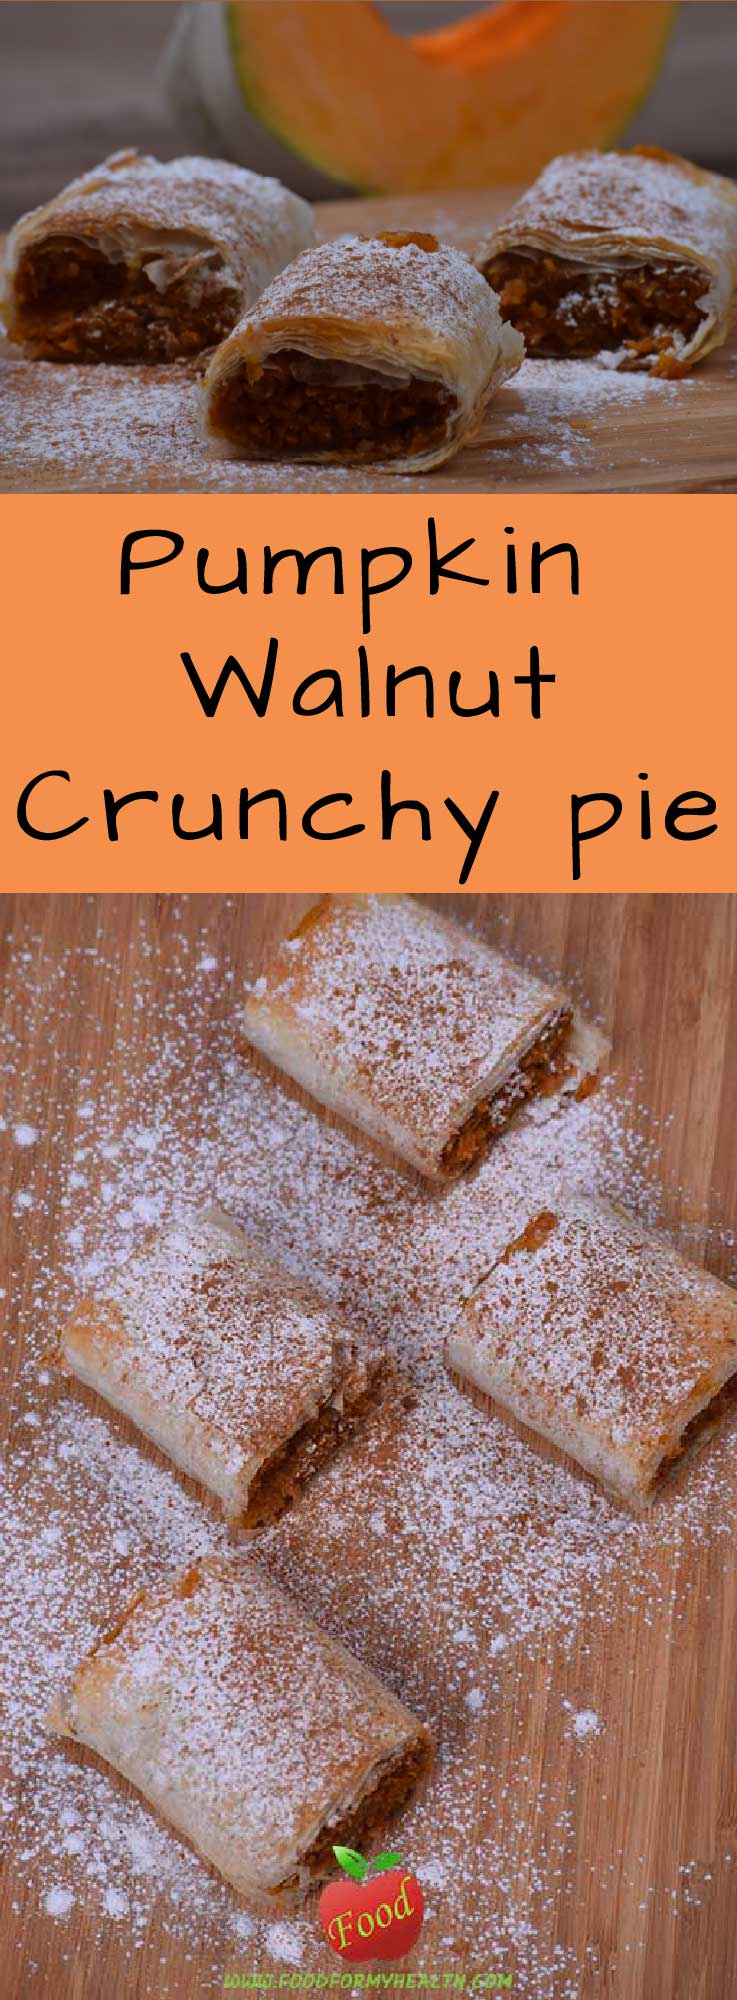 Pumpkin walnut crunchy pie